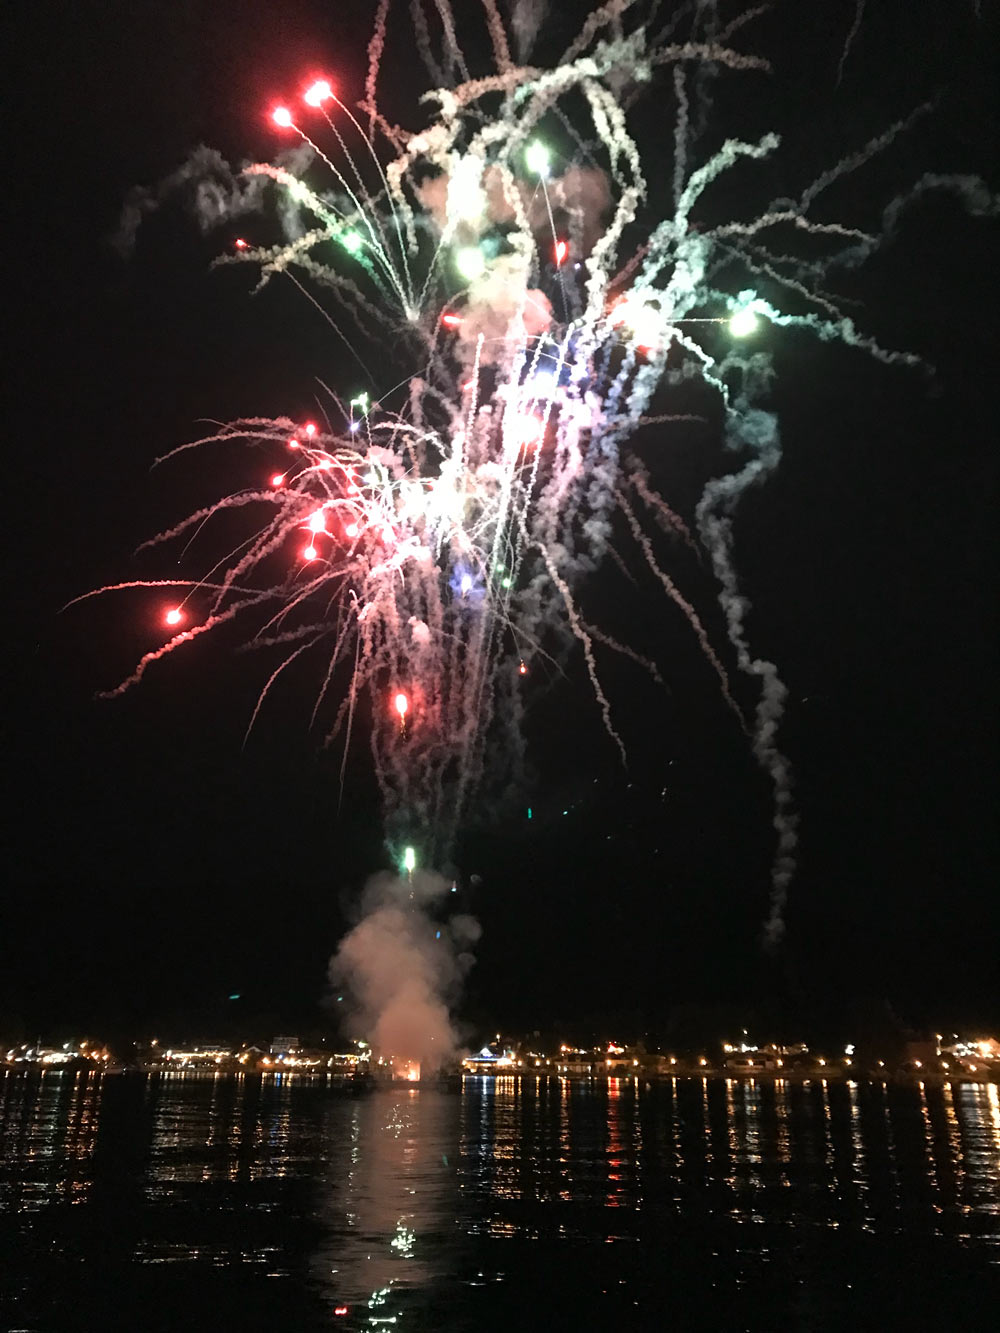 Fireworks Cruise